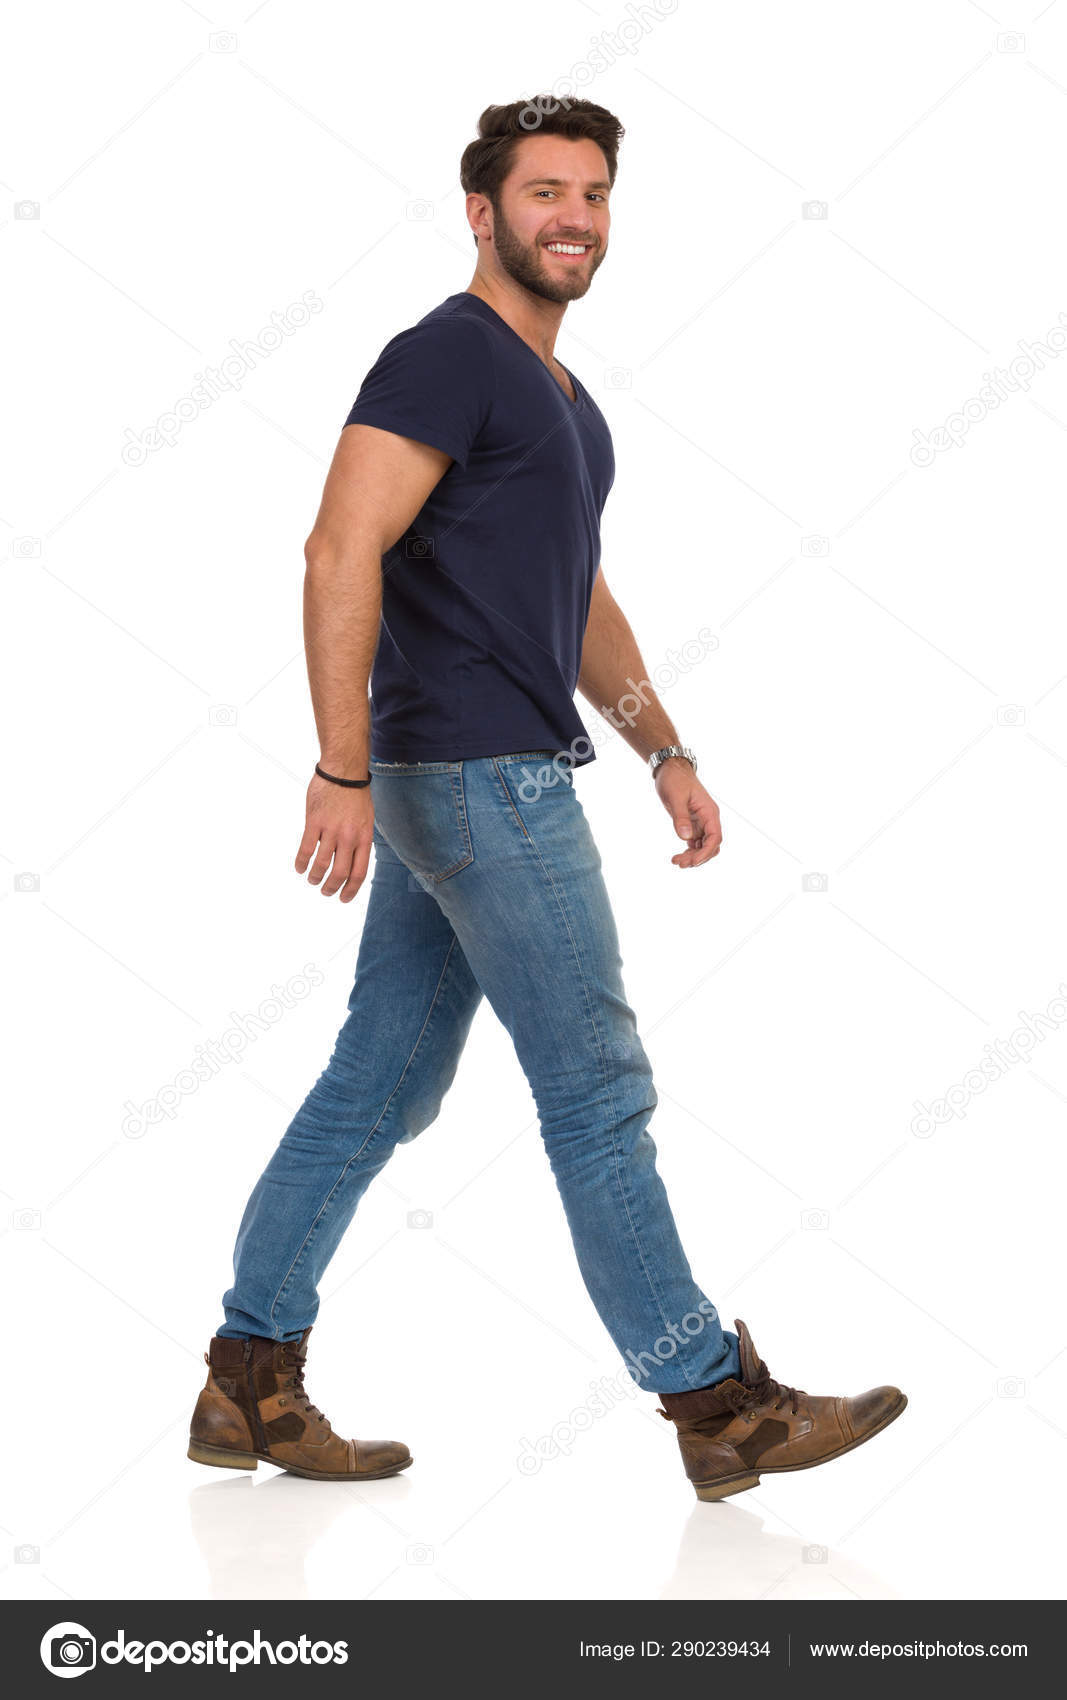 shirt jeans boots